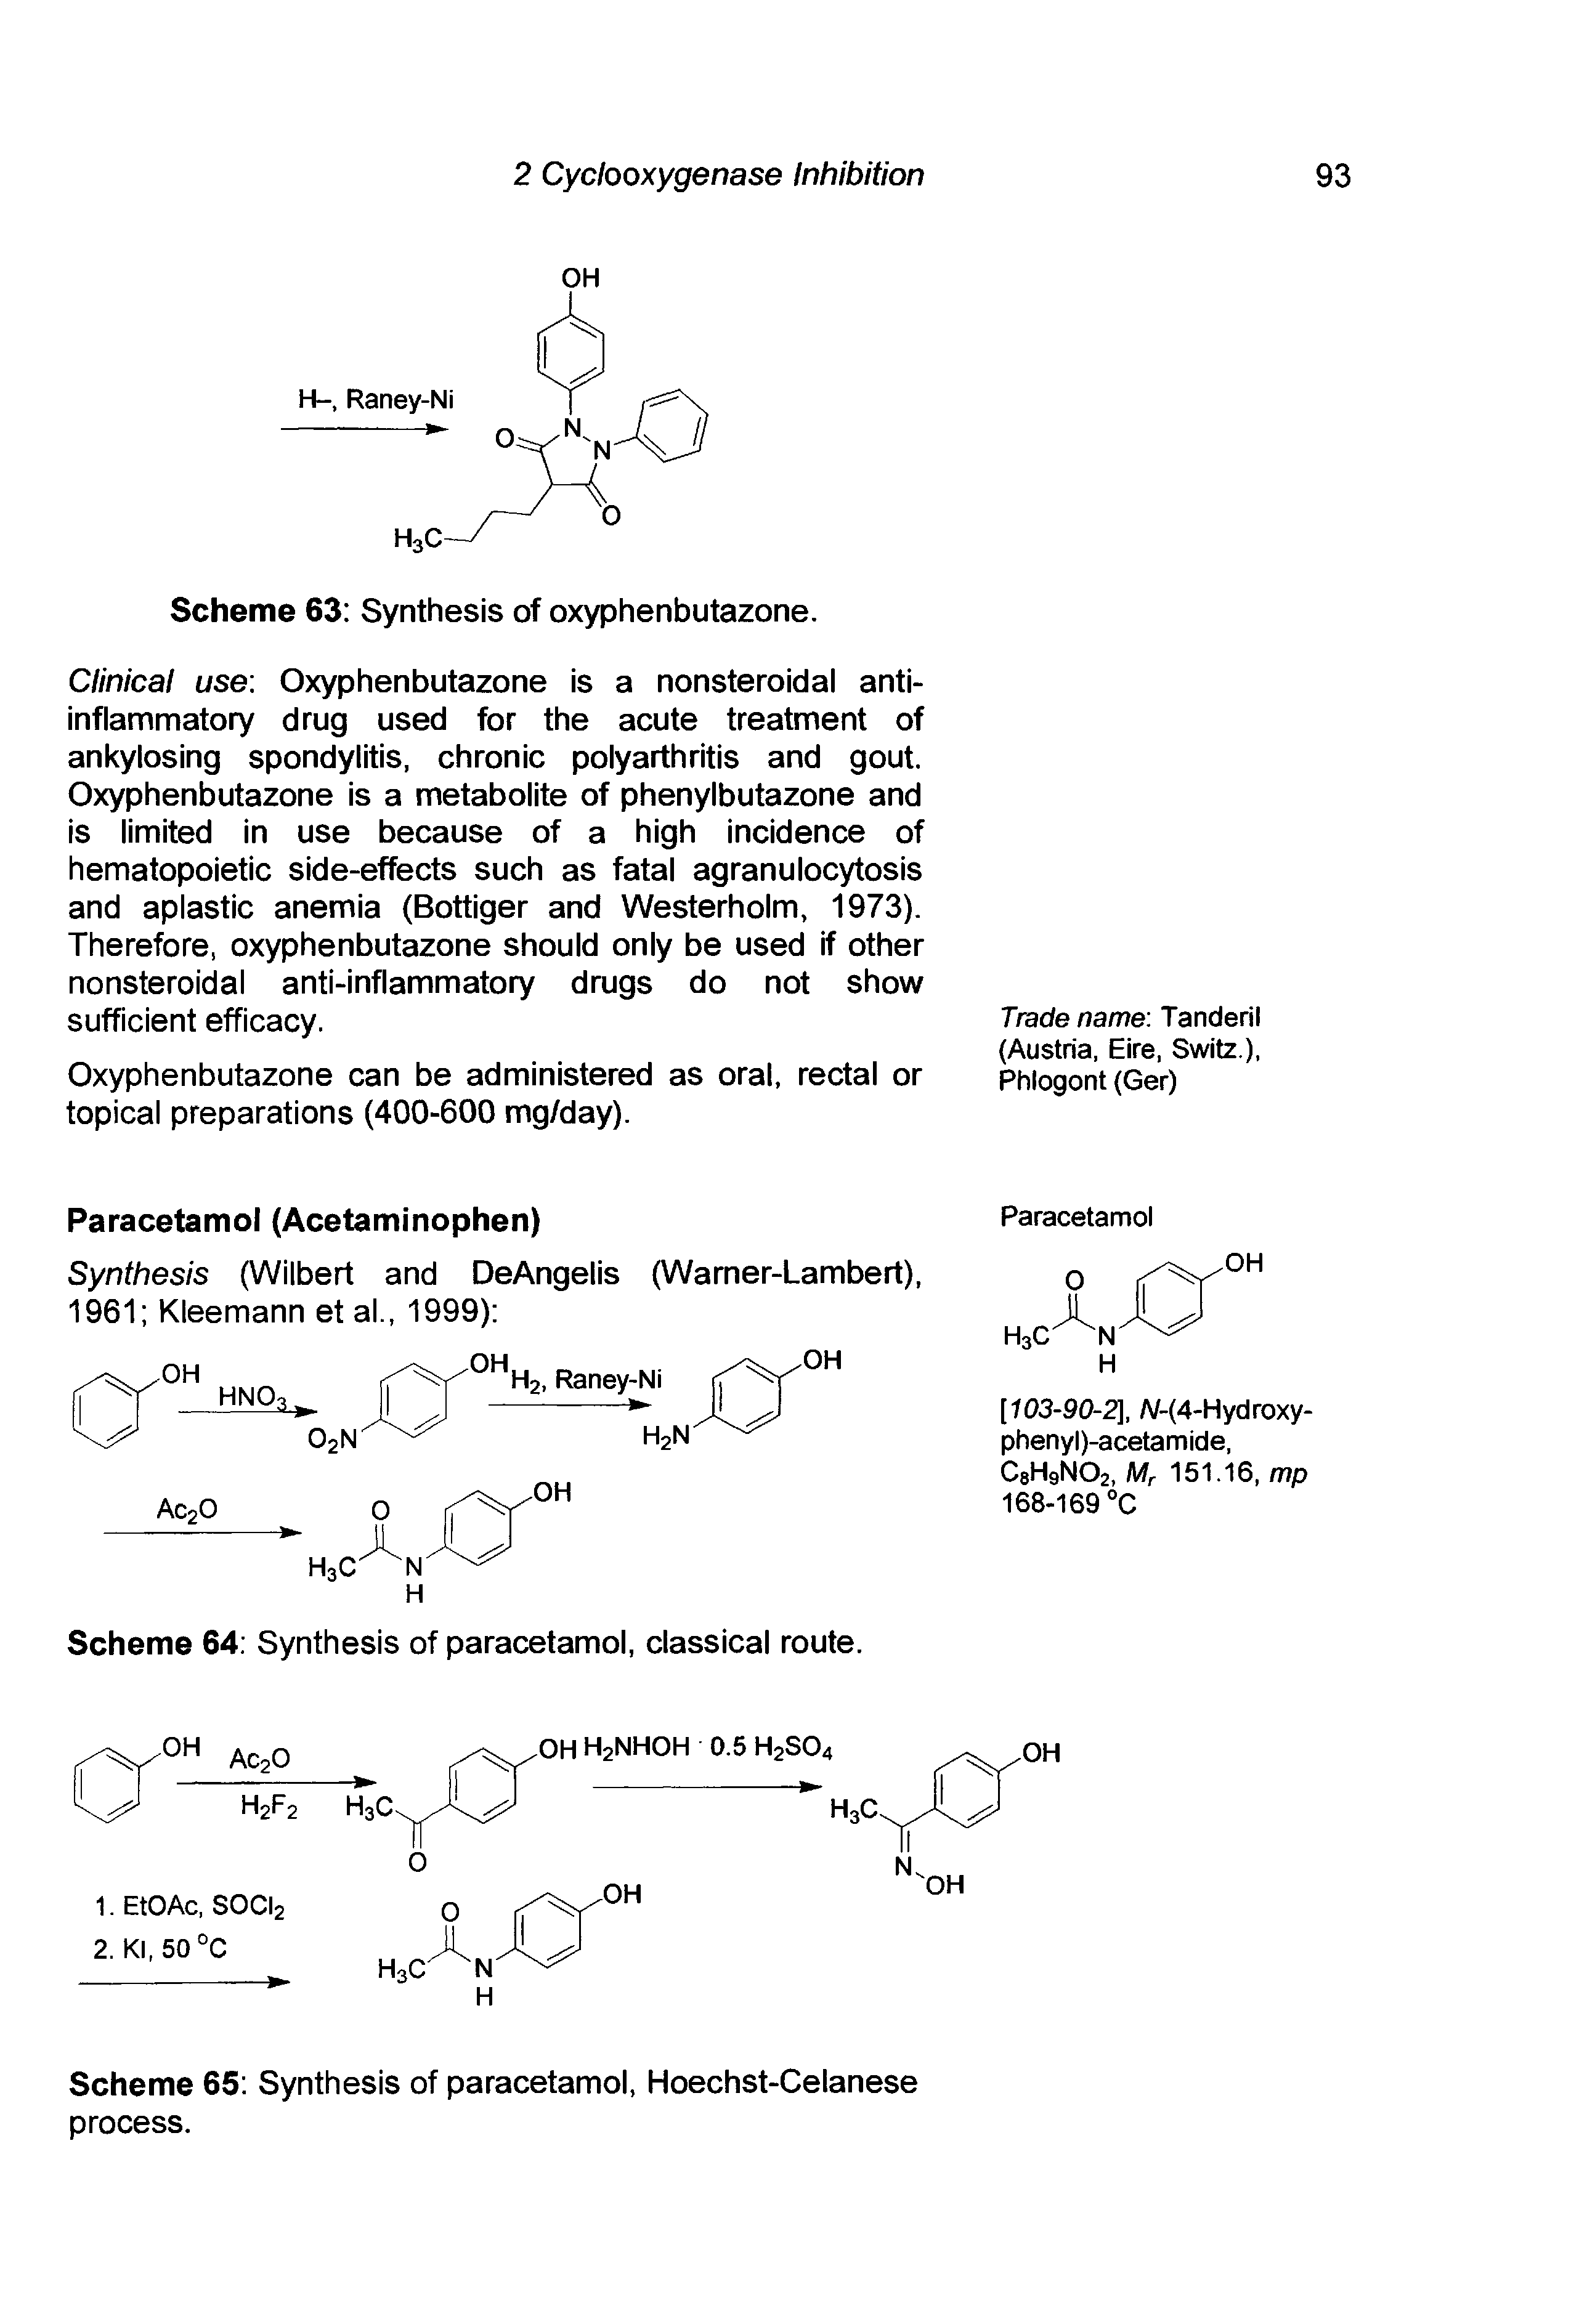 Scheme 65 Synthesis of paracetamol, Hoechst-Celanese process.